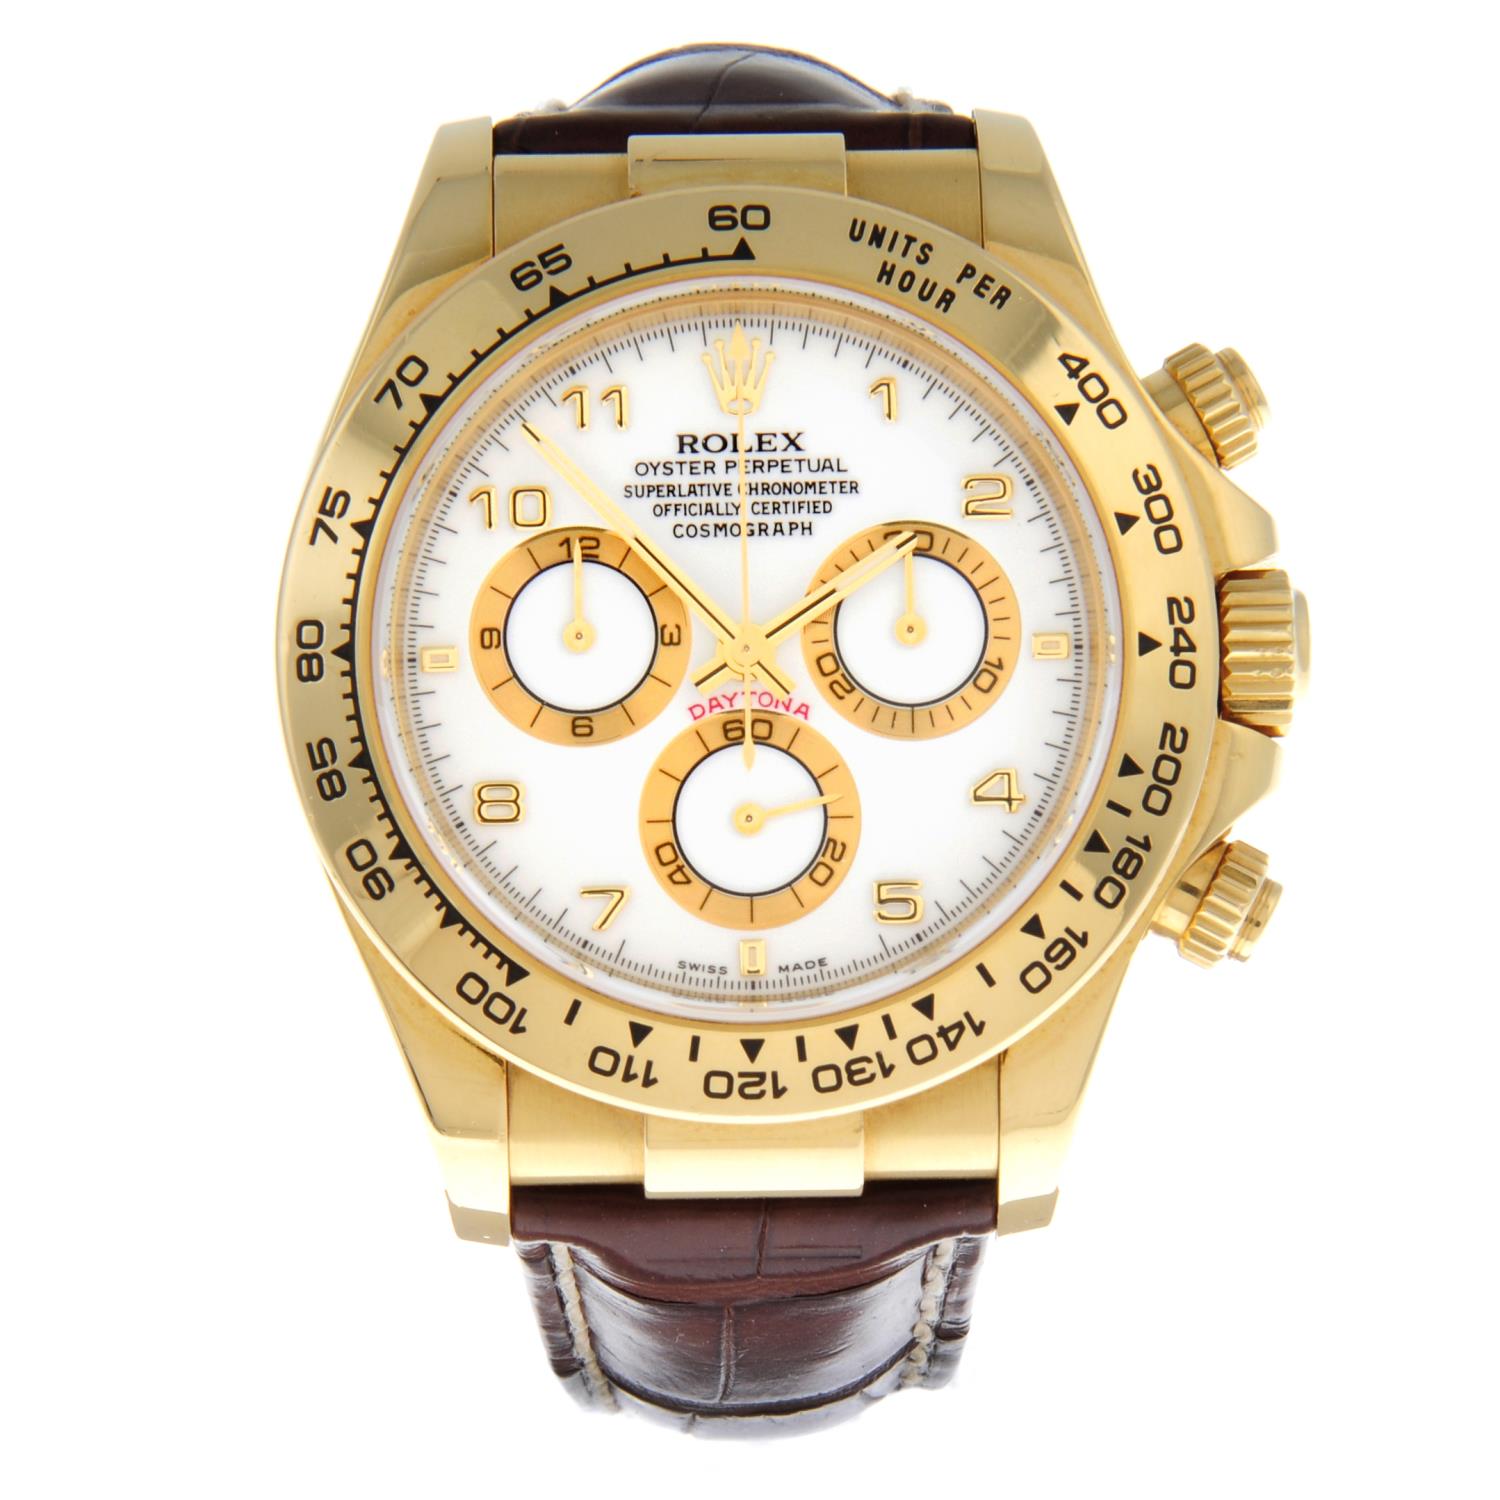 ROLEX - an Oyster Perpetual Cosmograph Daytona chronograph wrist watch.